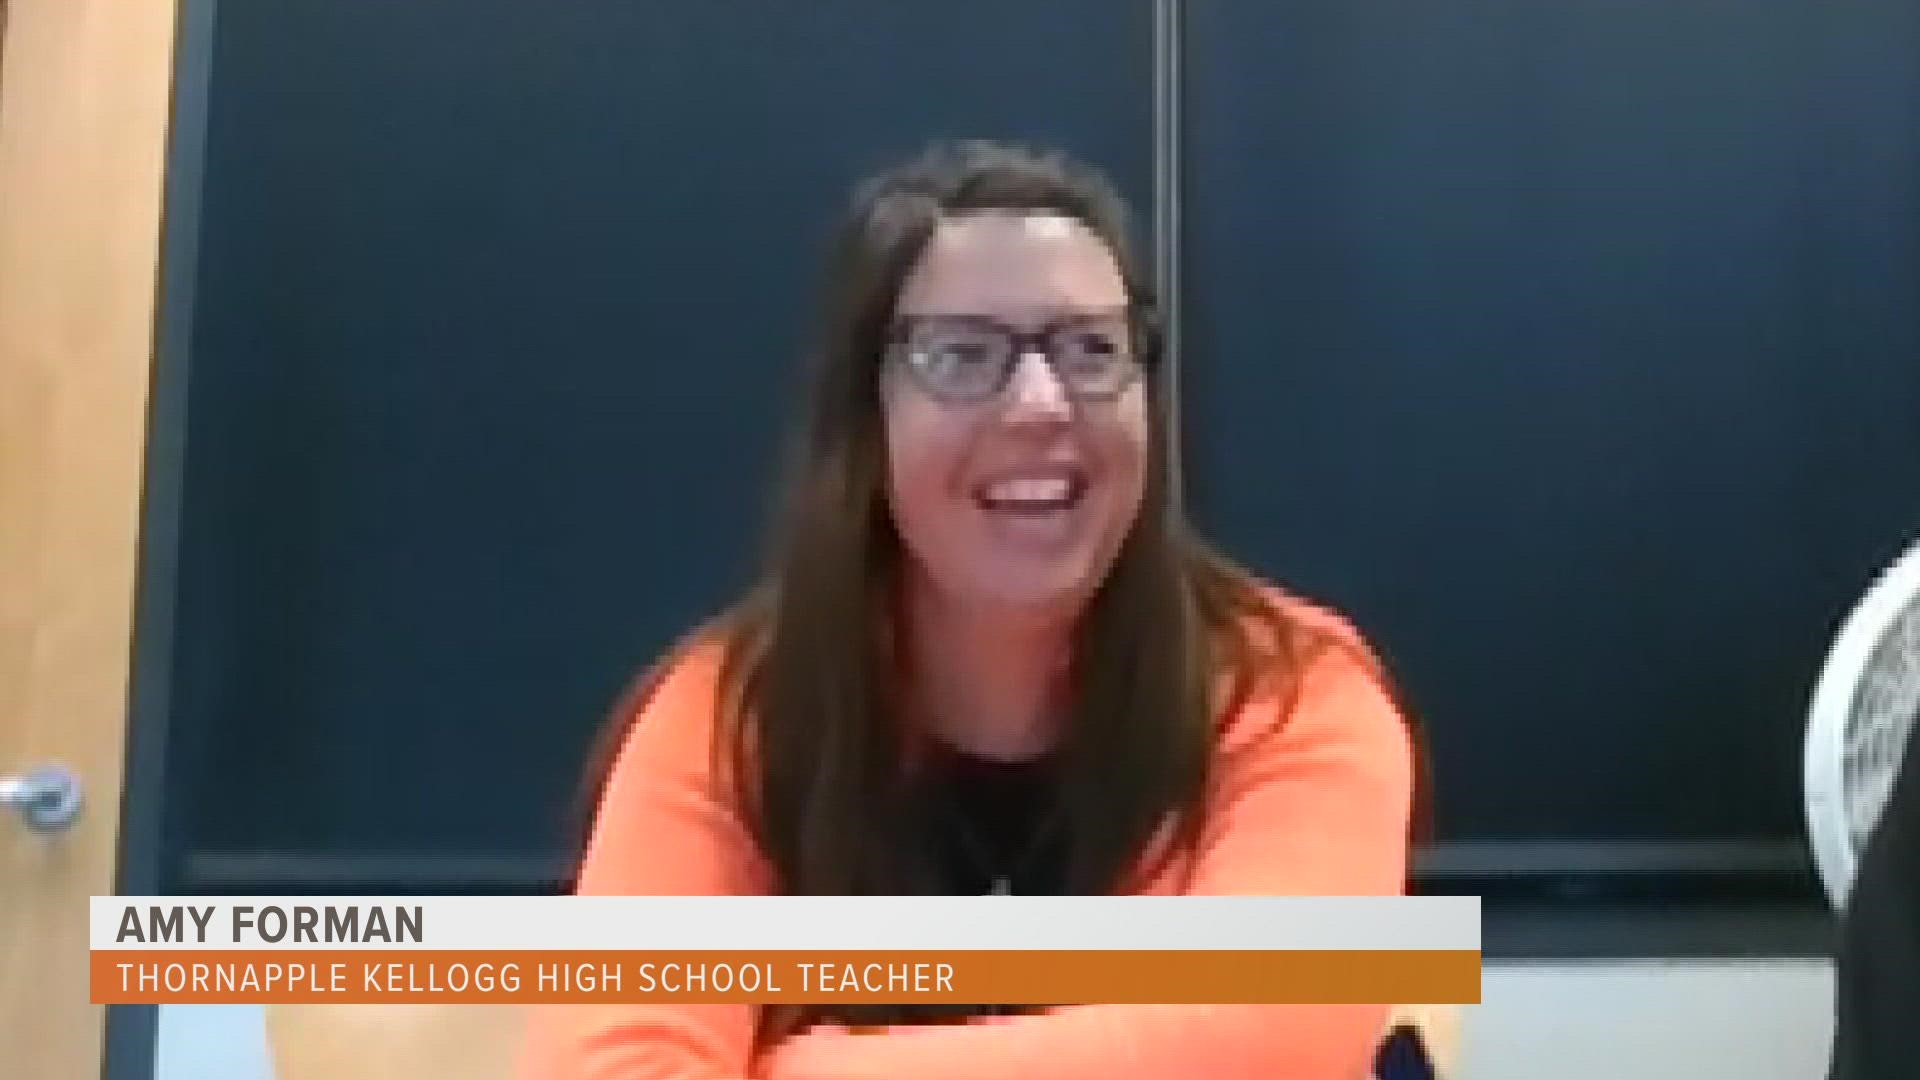 The April 4 13 ON YOUR SIDE Teacher of the Week is Amy Forman, a Thornapple Kellogg High School Teacher.